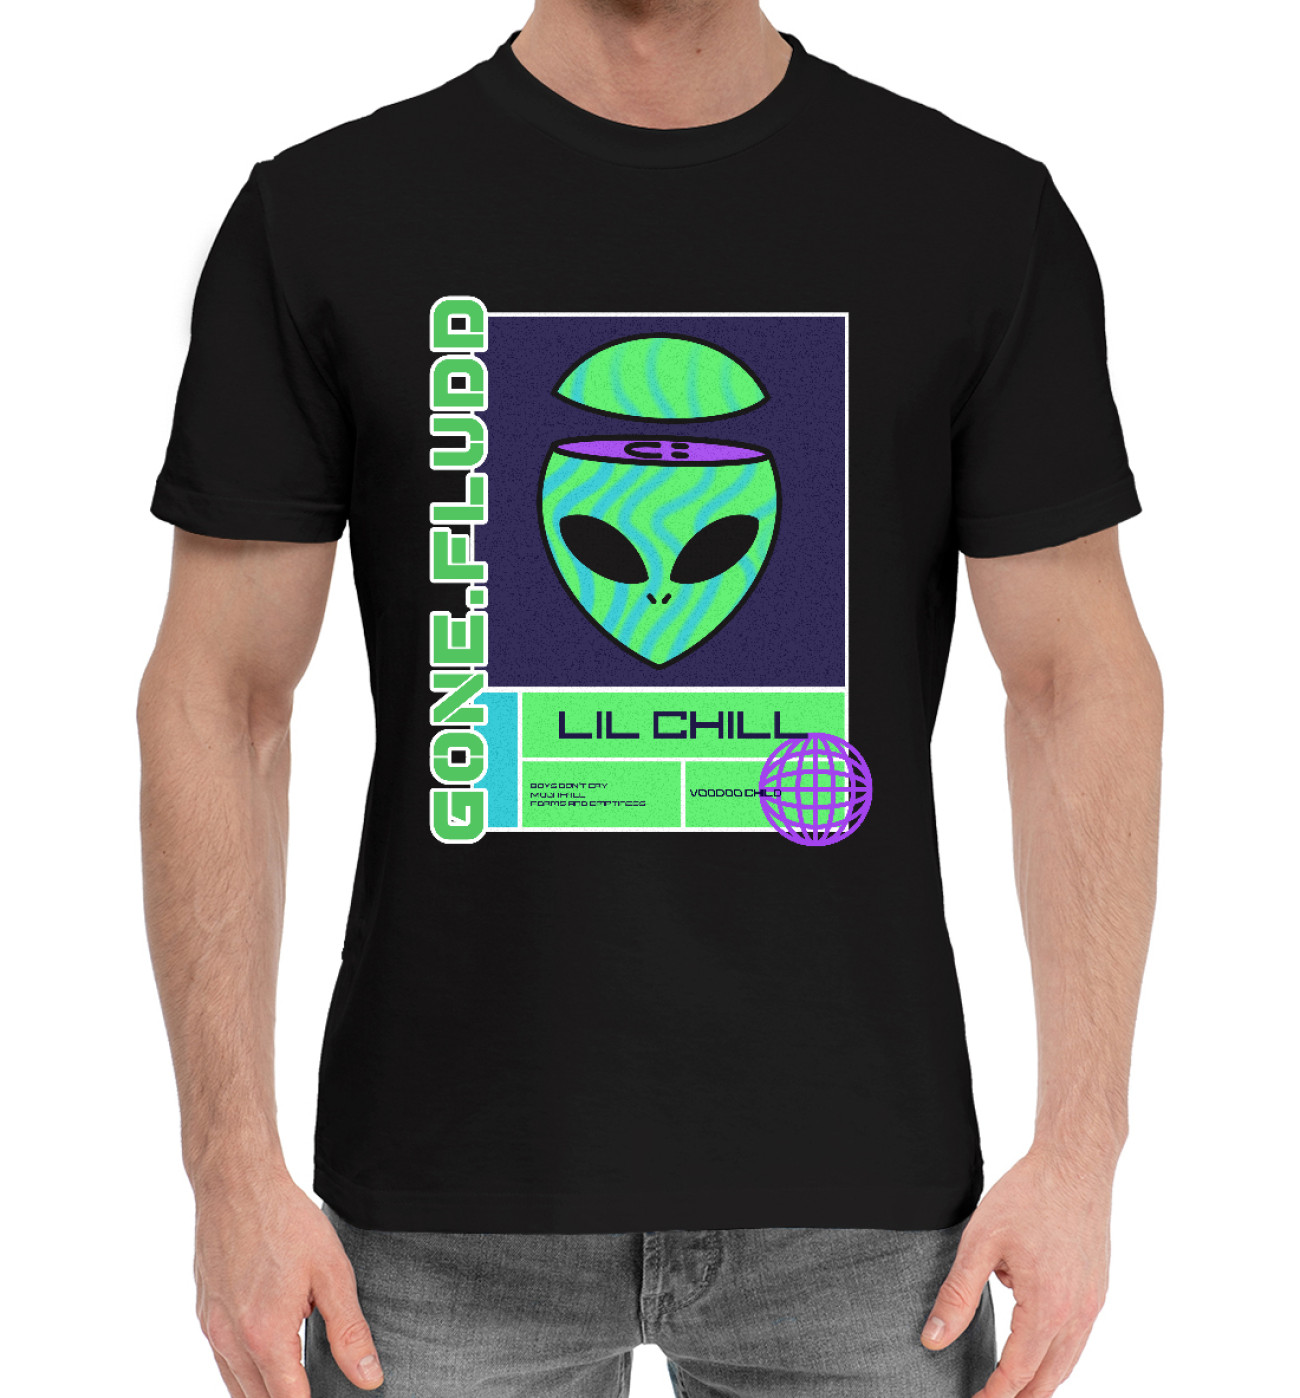 Мужская Хлопковая футболка GONE.Fludd UFO, артикул: GNF-659702-hfu-2